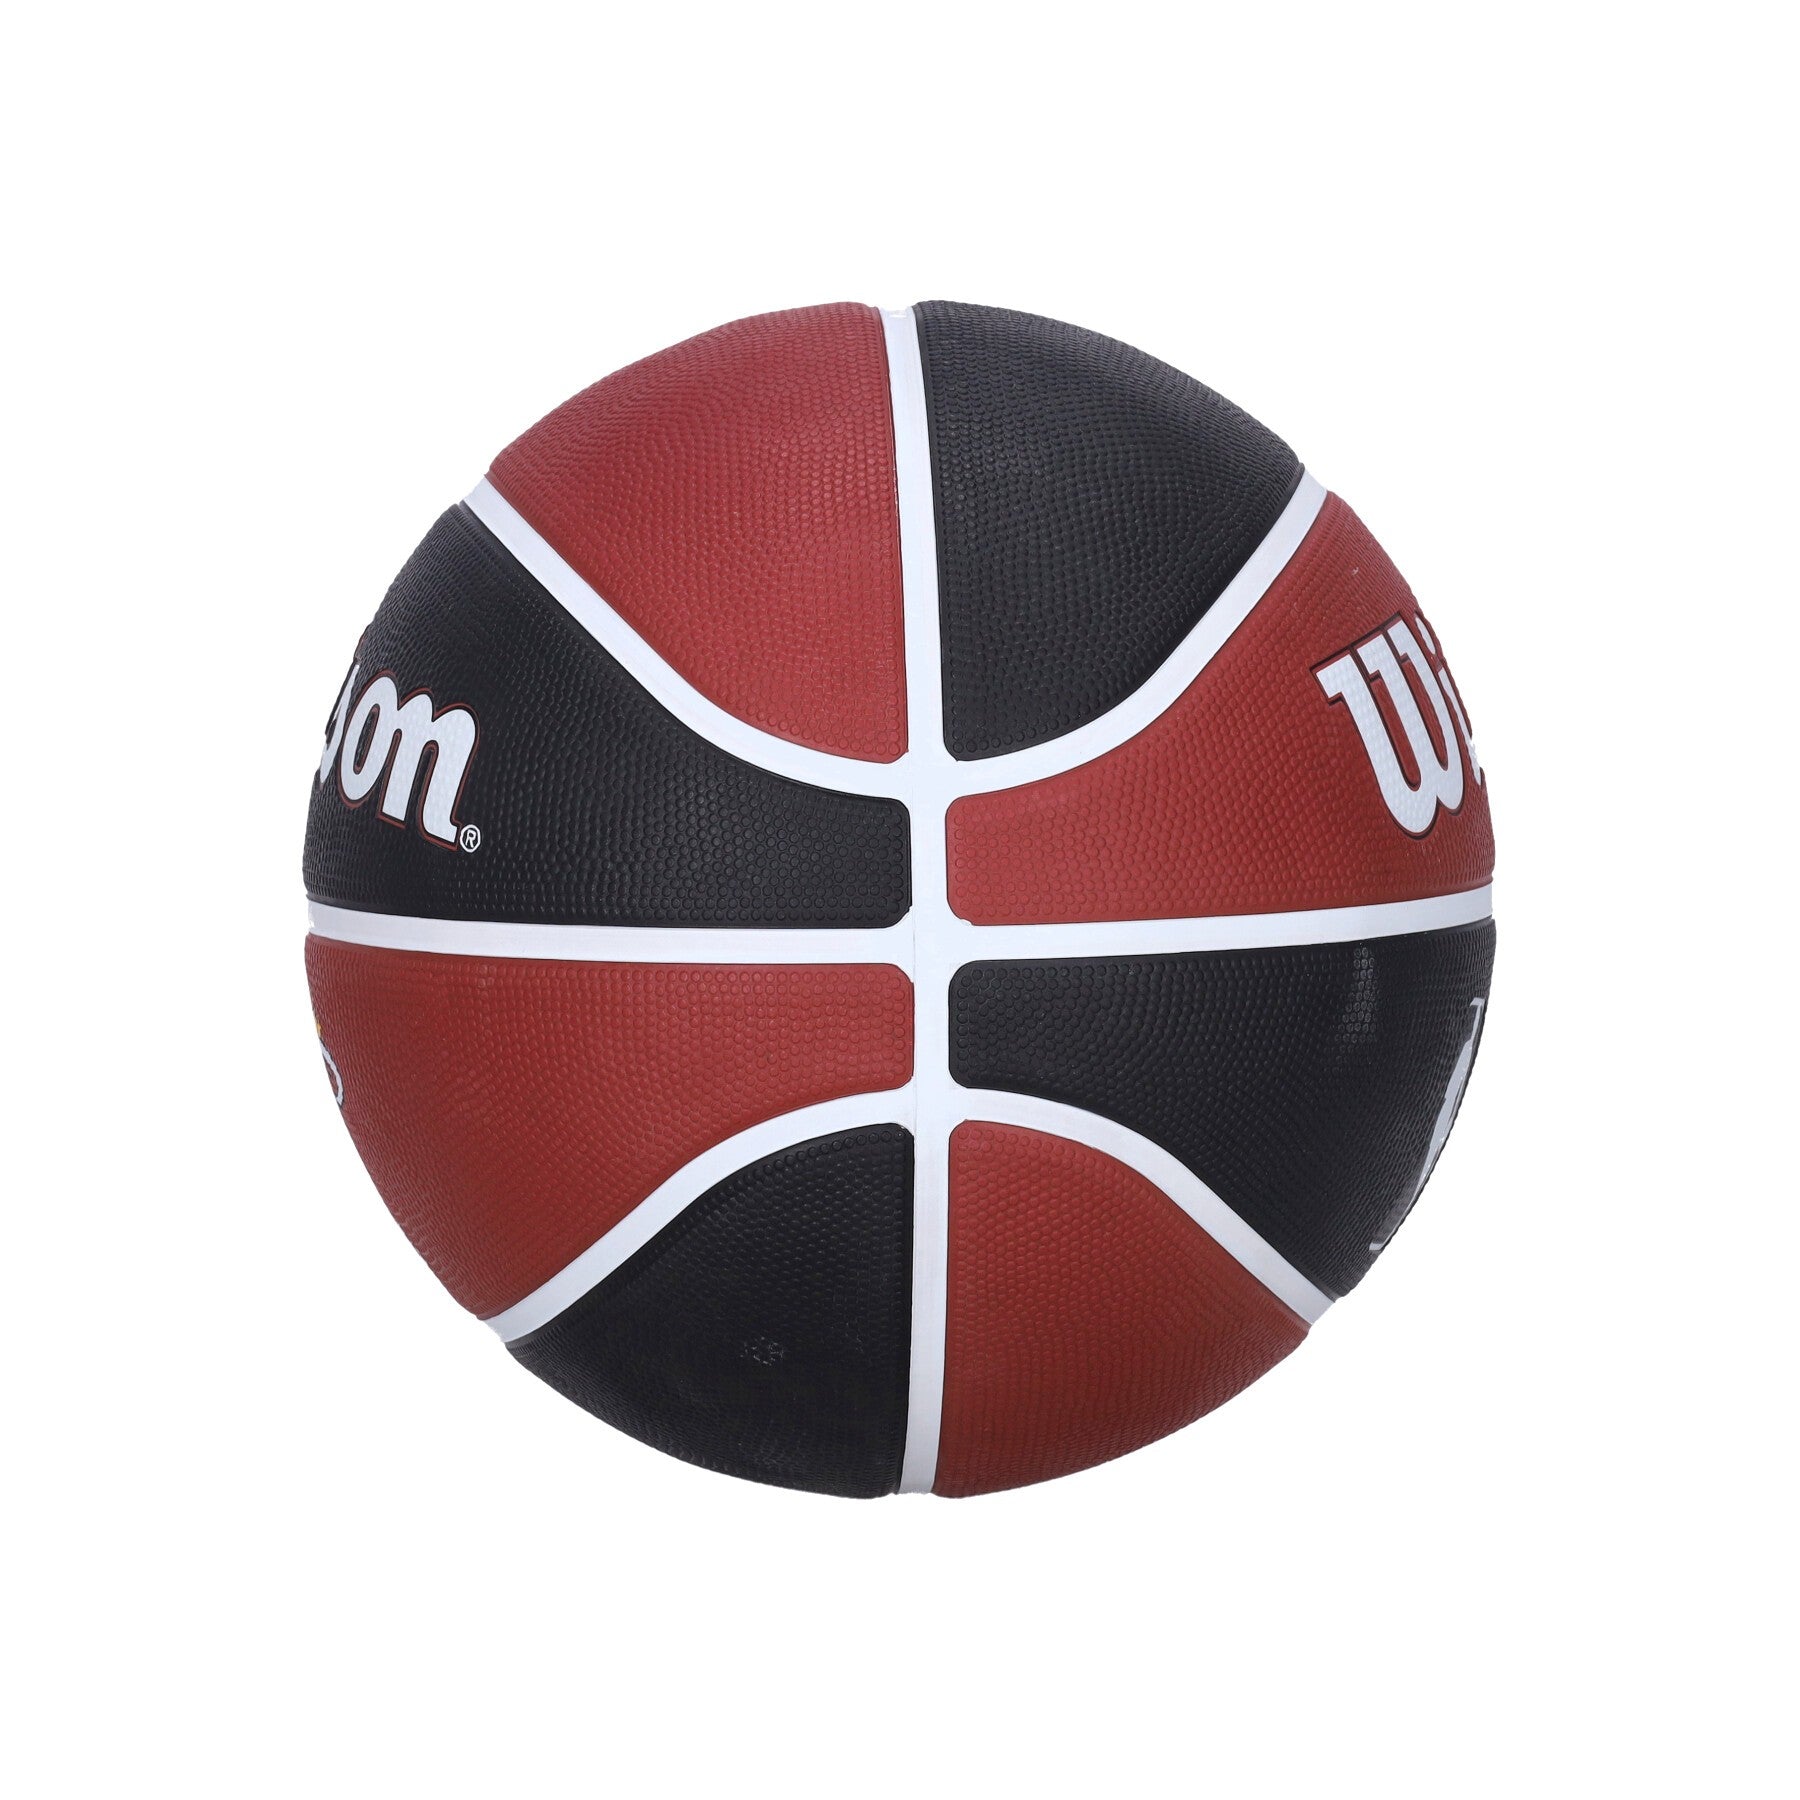 Pallone Uomo Nba Team Tribute Basketball Size 7 Miahea Original Team Colors